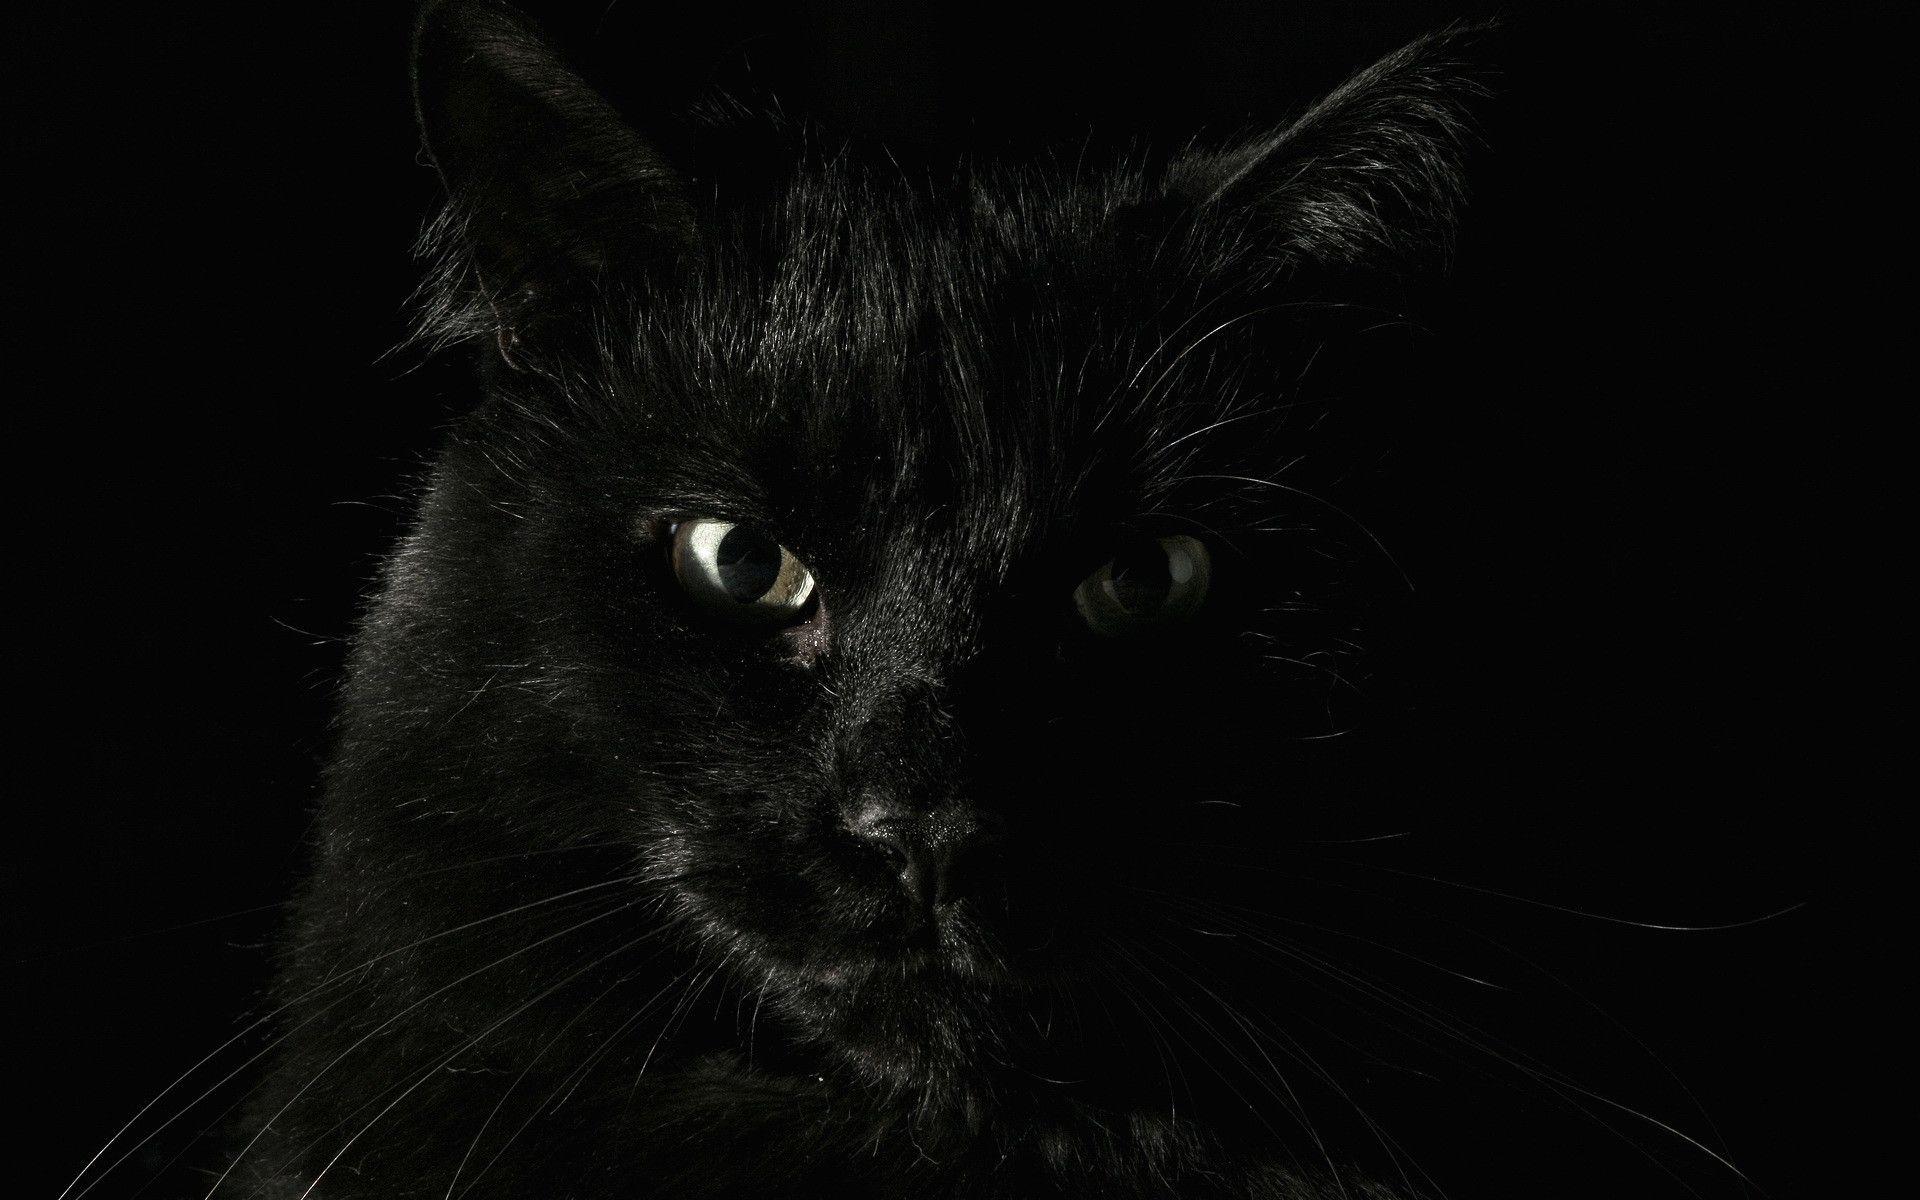 Black Cat 3D Wallpapers - Top Free Black Cat 3D Backgrounds